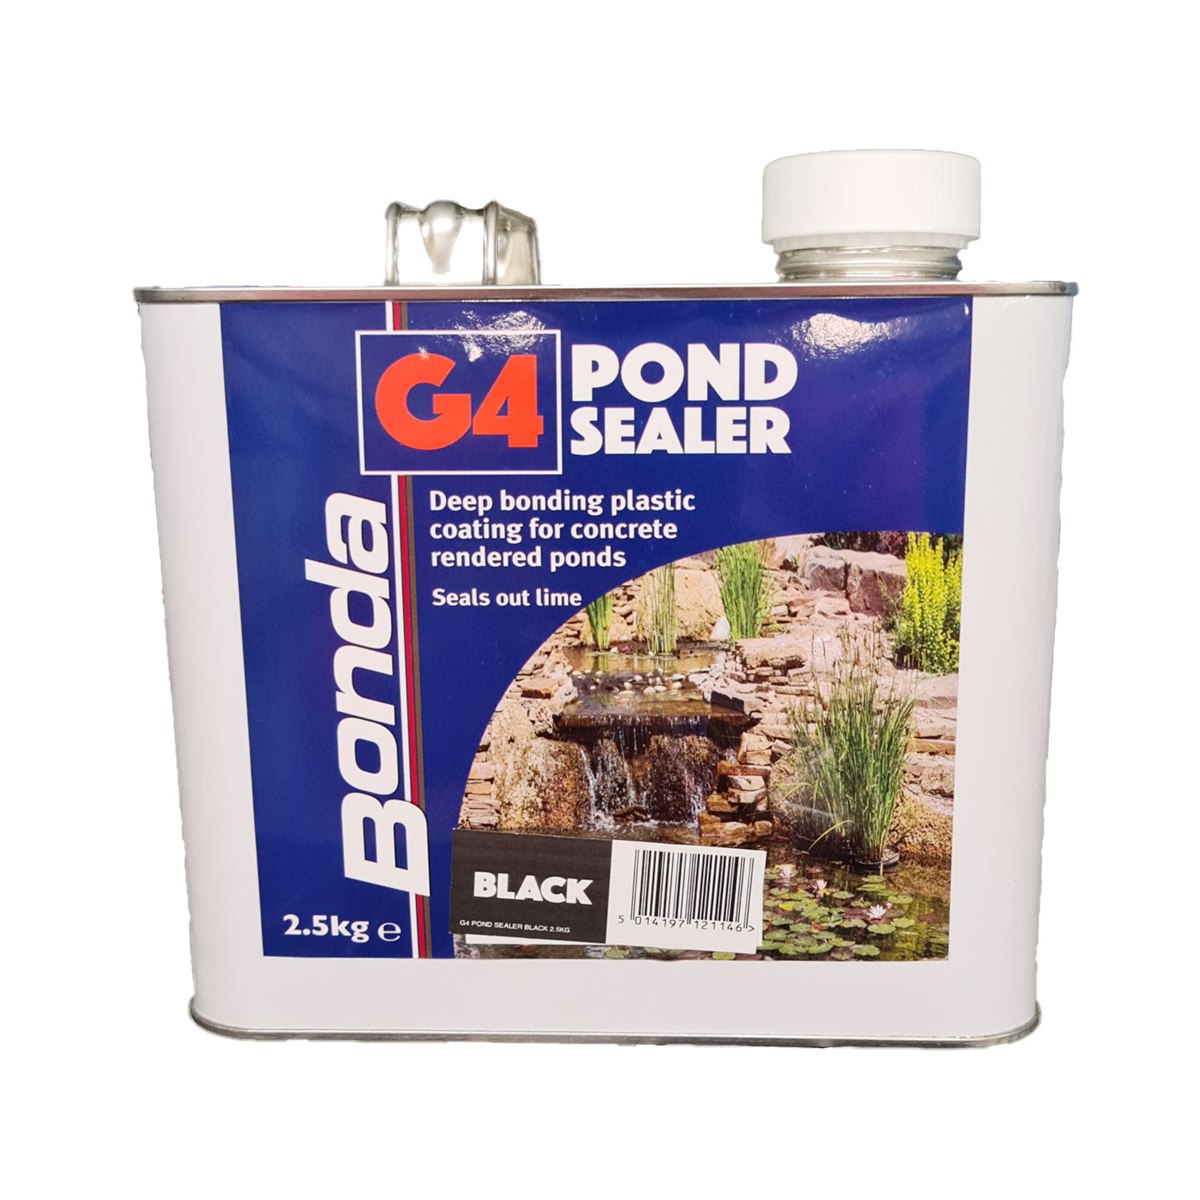 Bonda G4 Pond Sealer 2.5kg Black